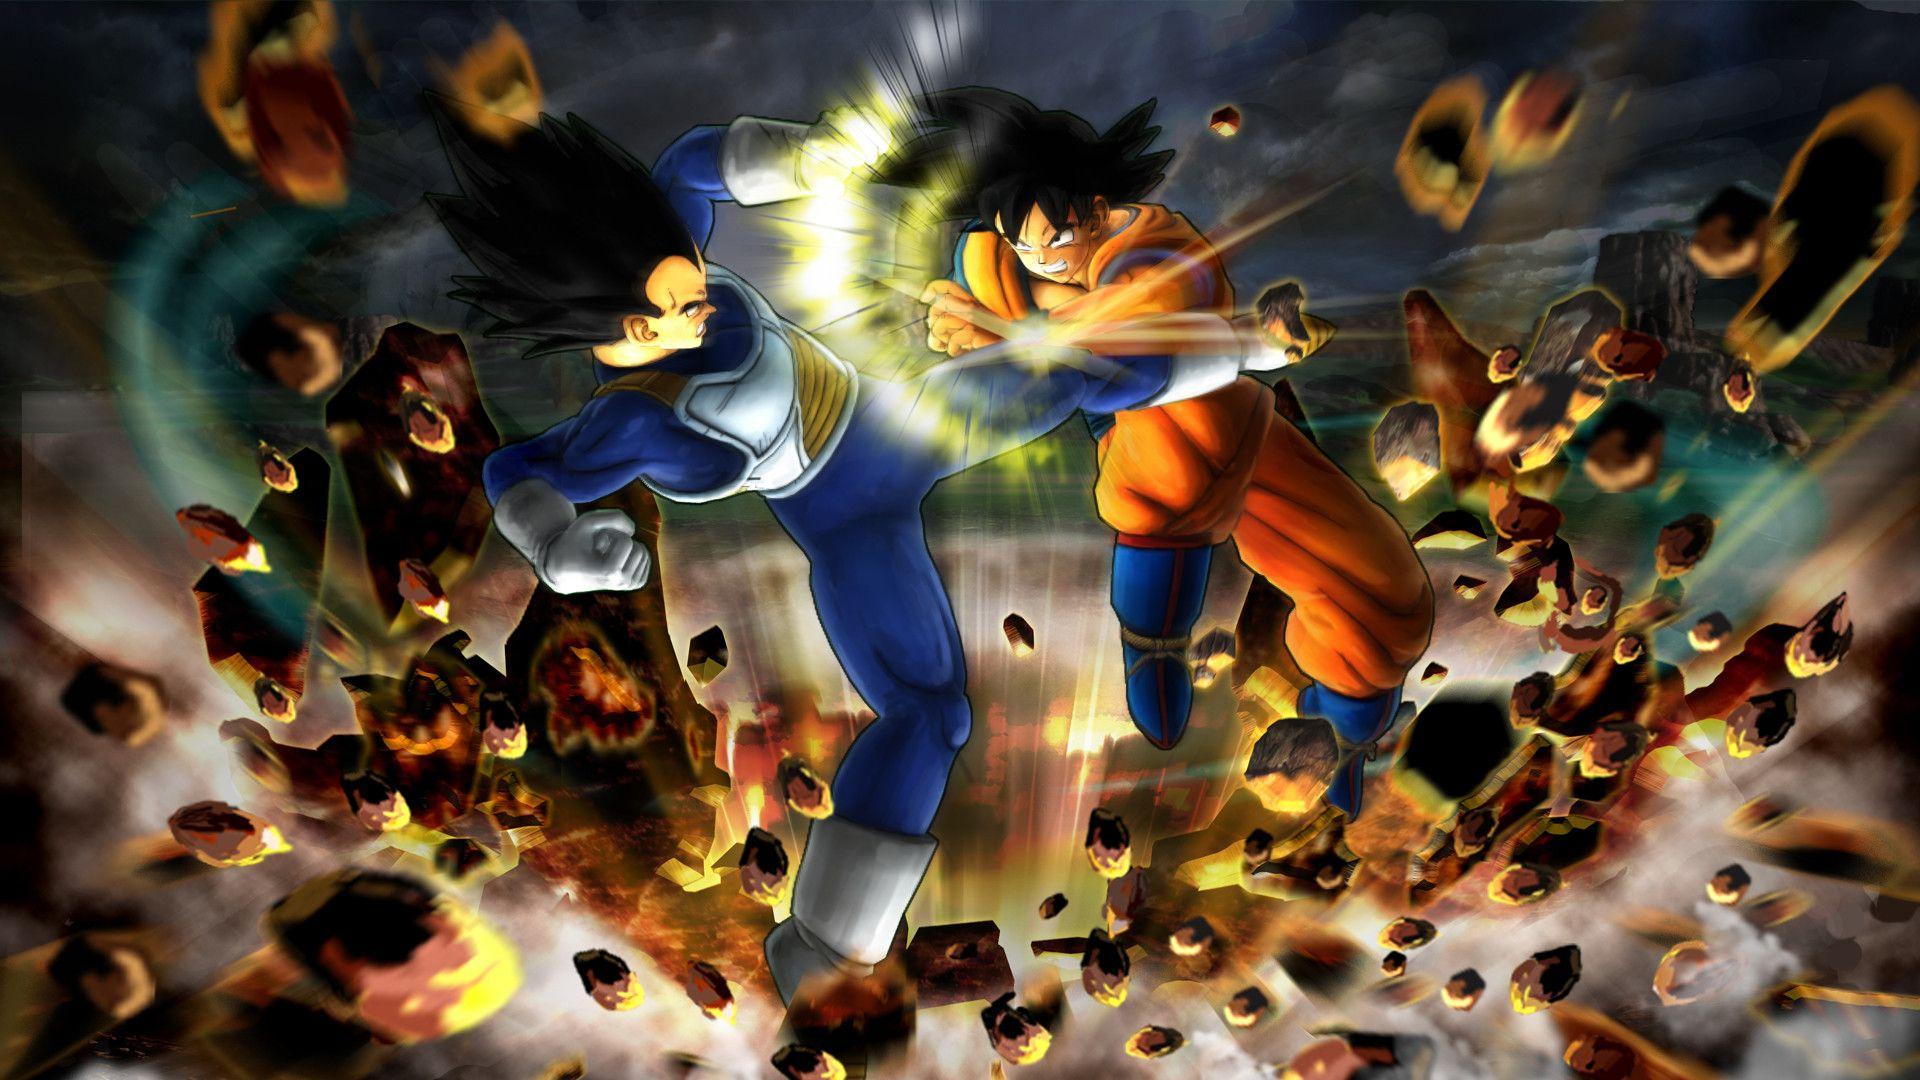 epic battle  Other  Anime Background Wallpapers on Desktop Nexus Image  965154